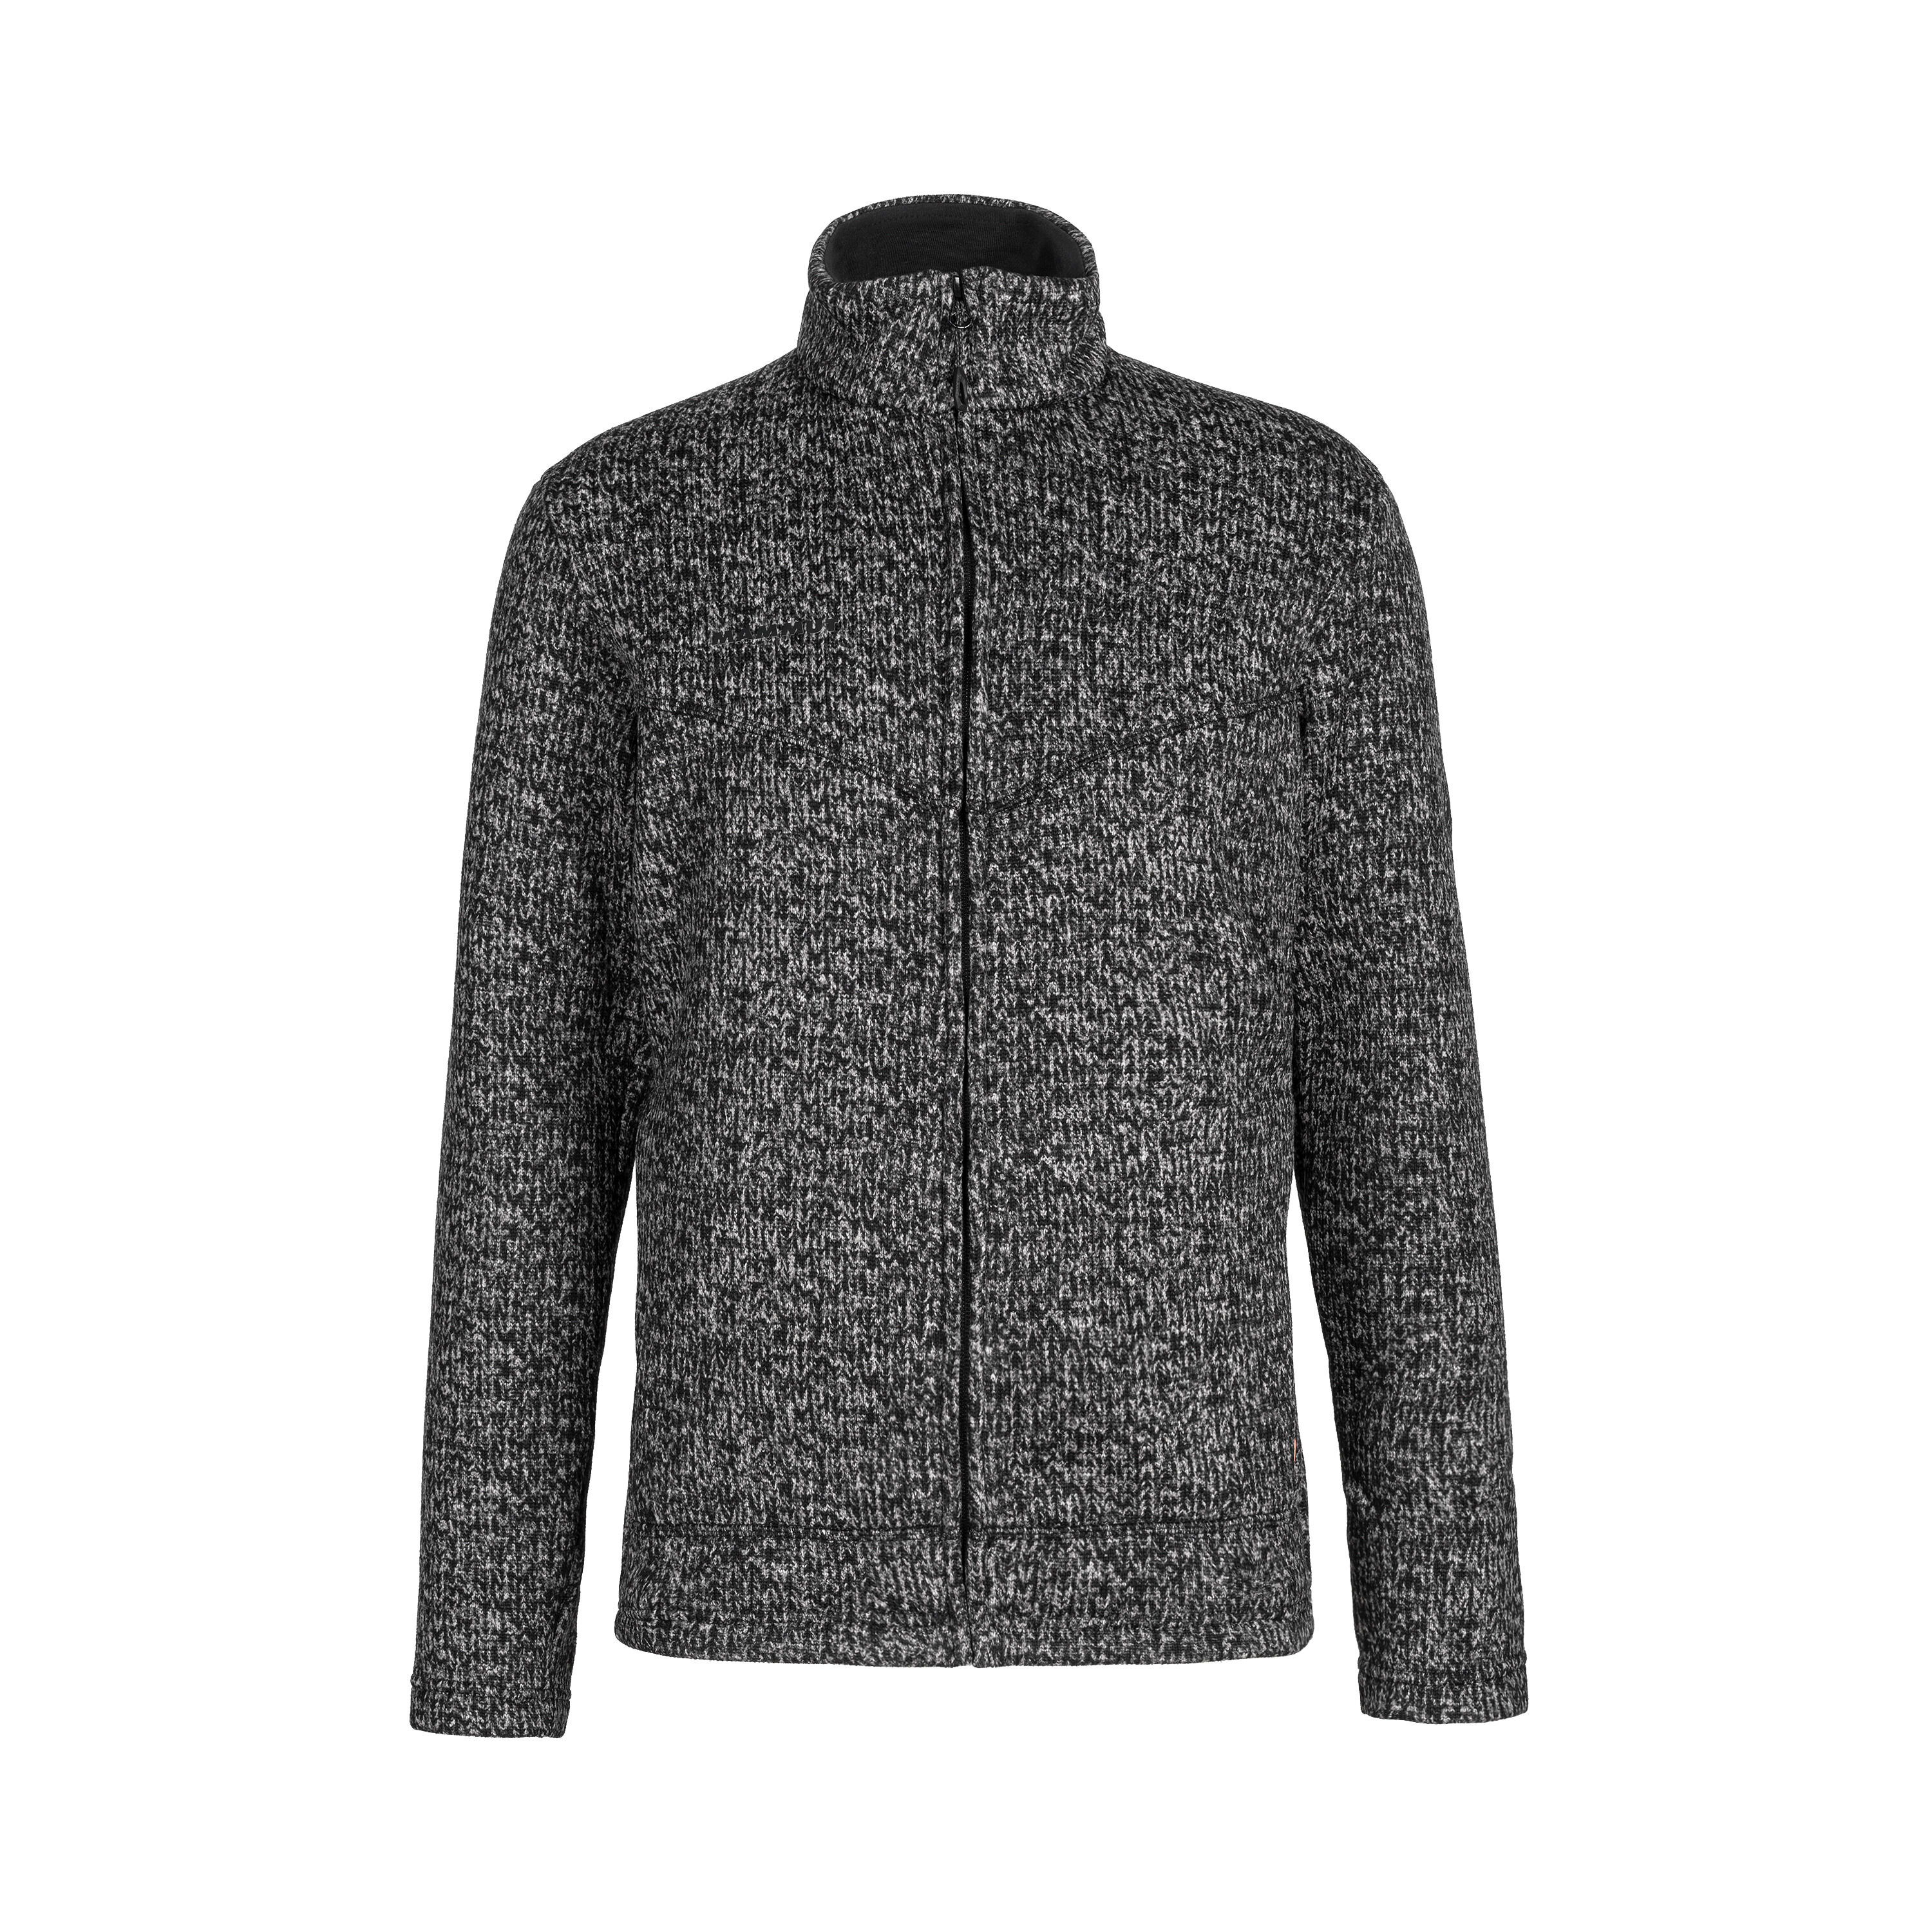 Mammut Chamuera ML Jacket - Fleece jacket - Men's